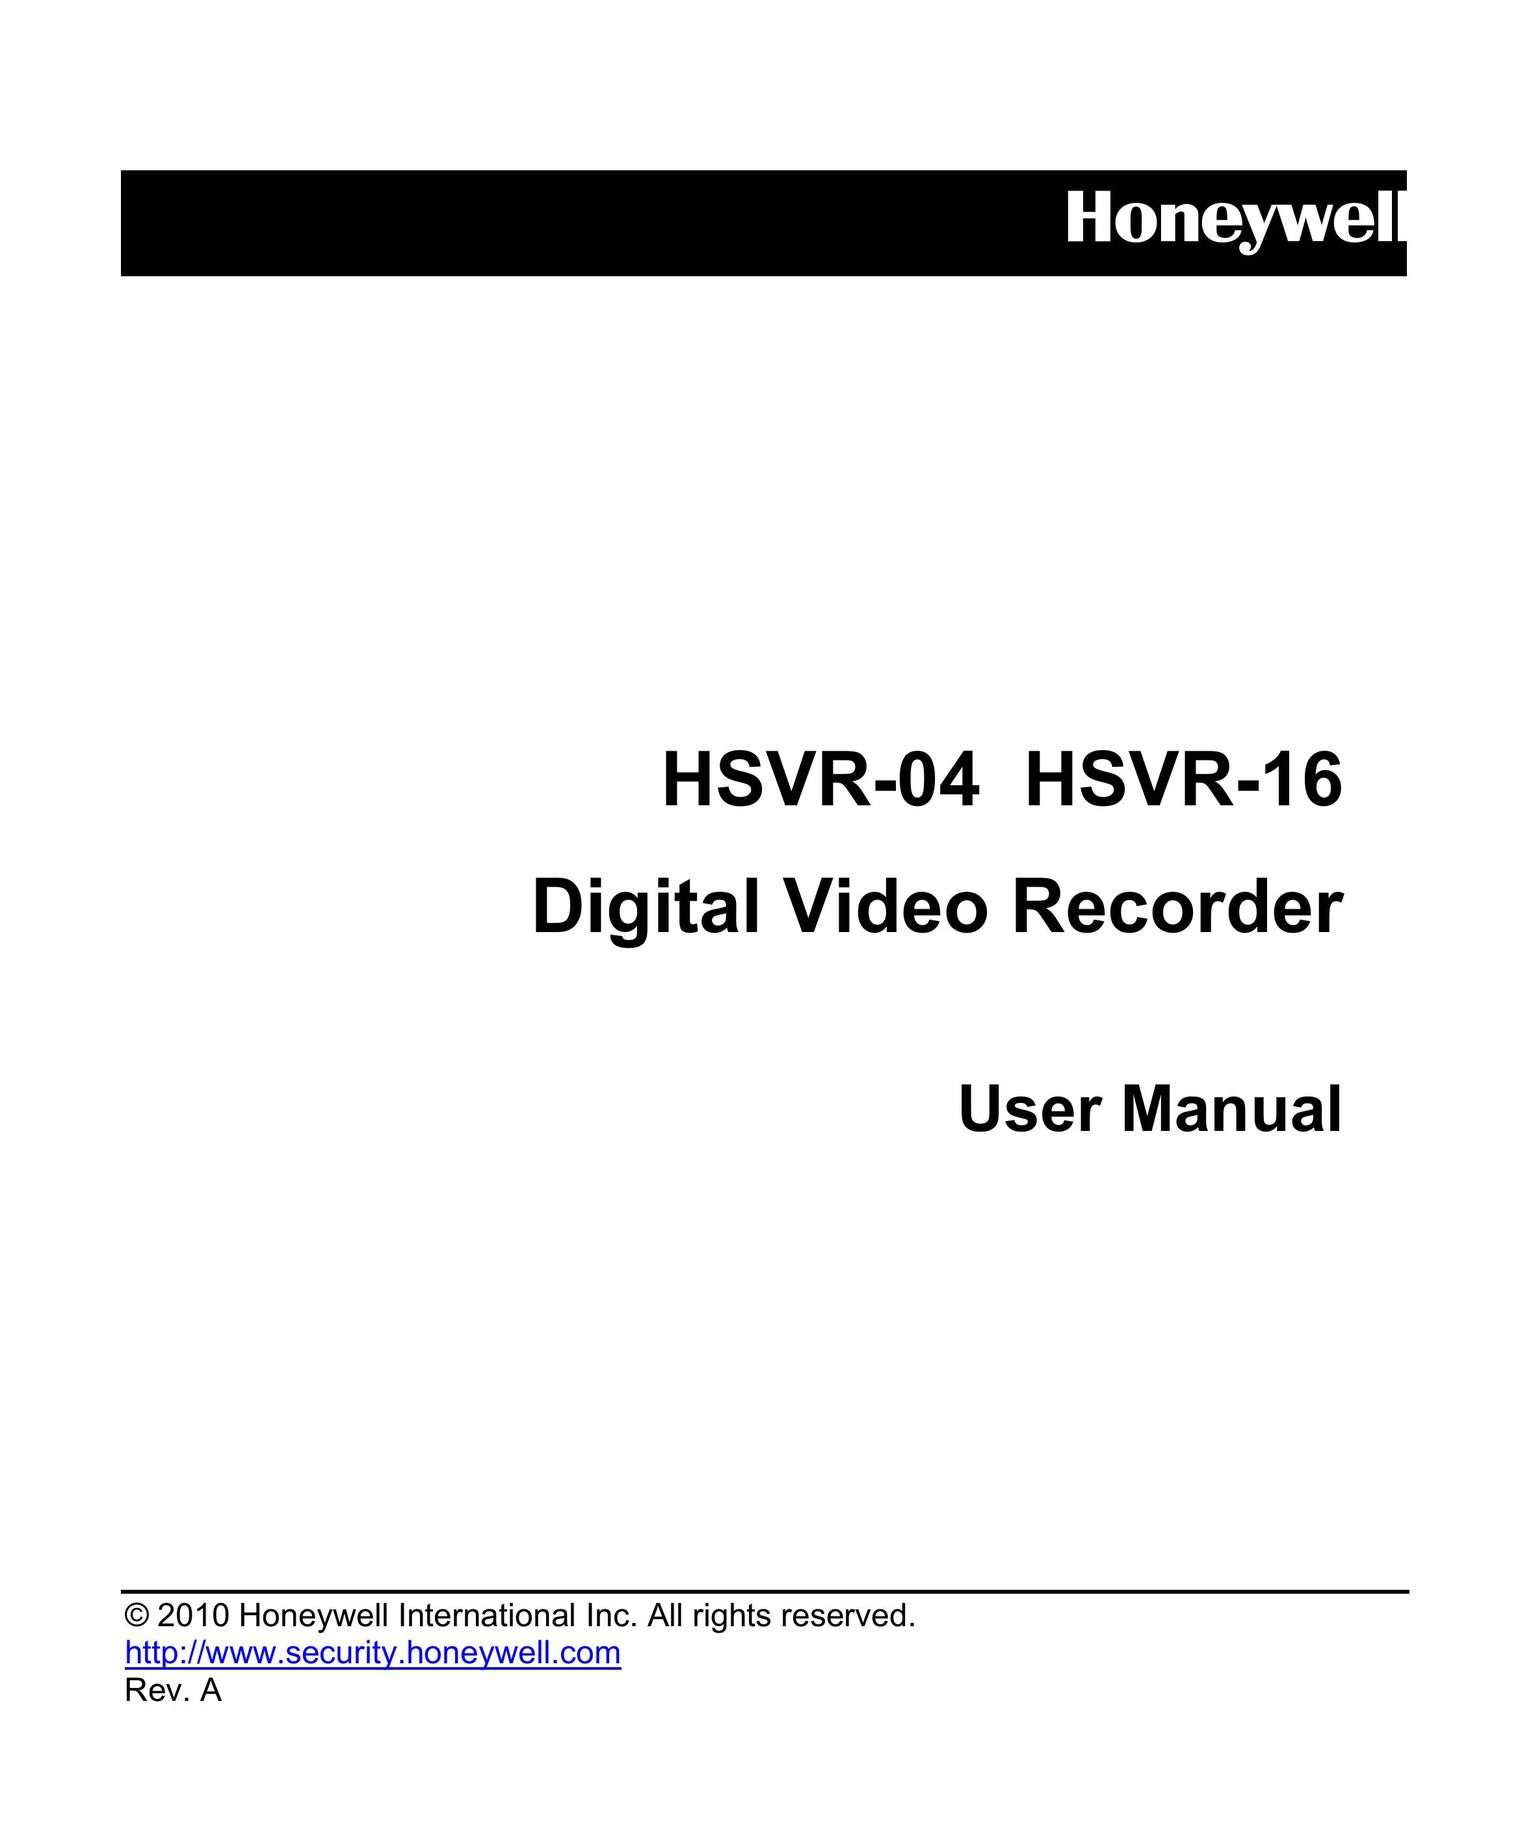 Honeywell HSVR-16 DVR User Manual